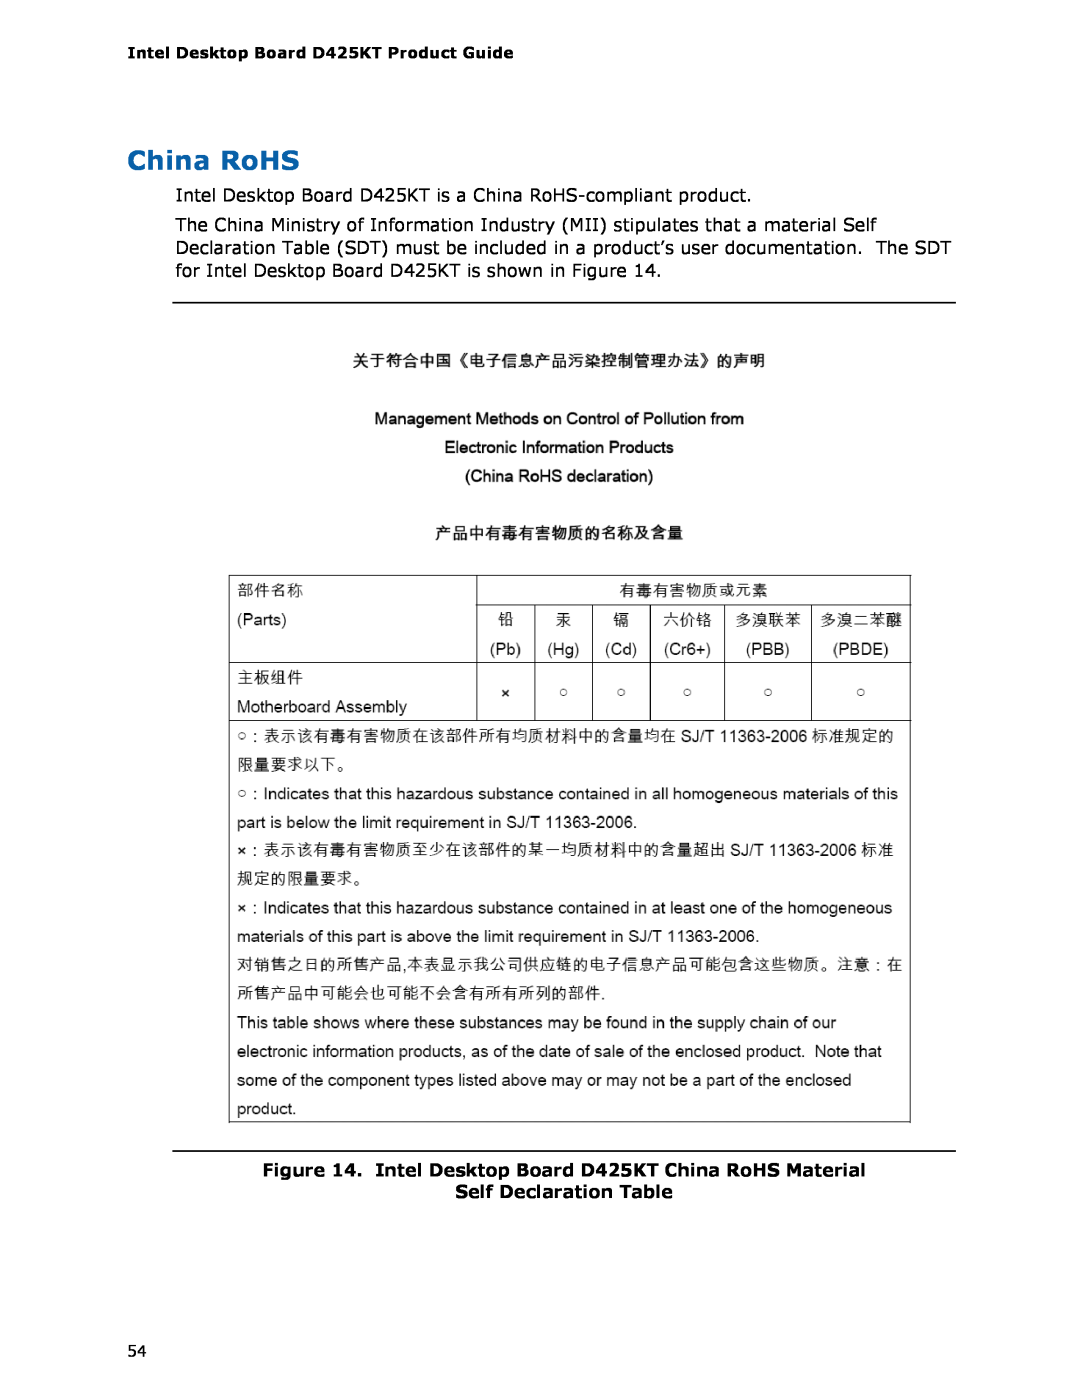 Intel manual Intel Desktop Board D425KT China RoHS Material, Self Declaration Table 